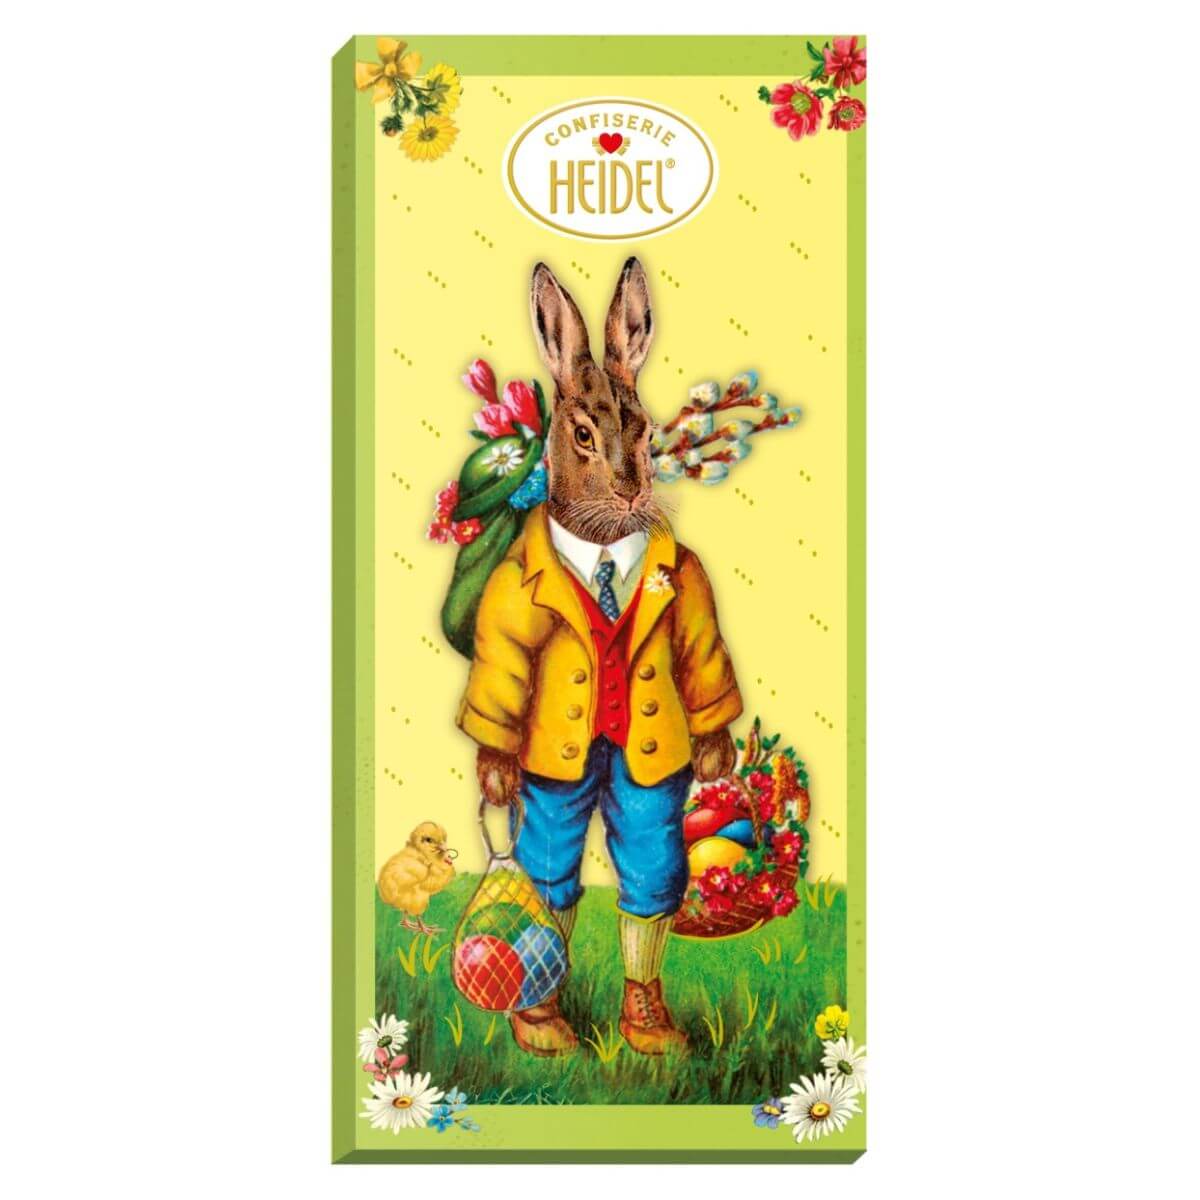 Heidel Easter Nostalgia Boy Bunny Milk Chocolate Bar 100g